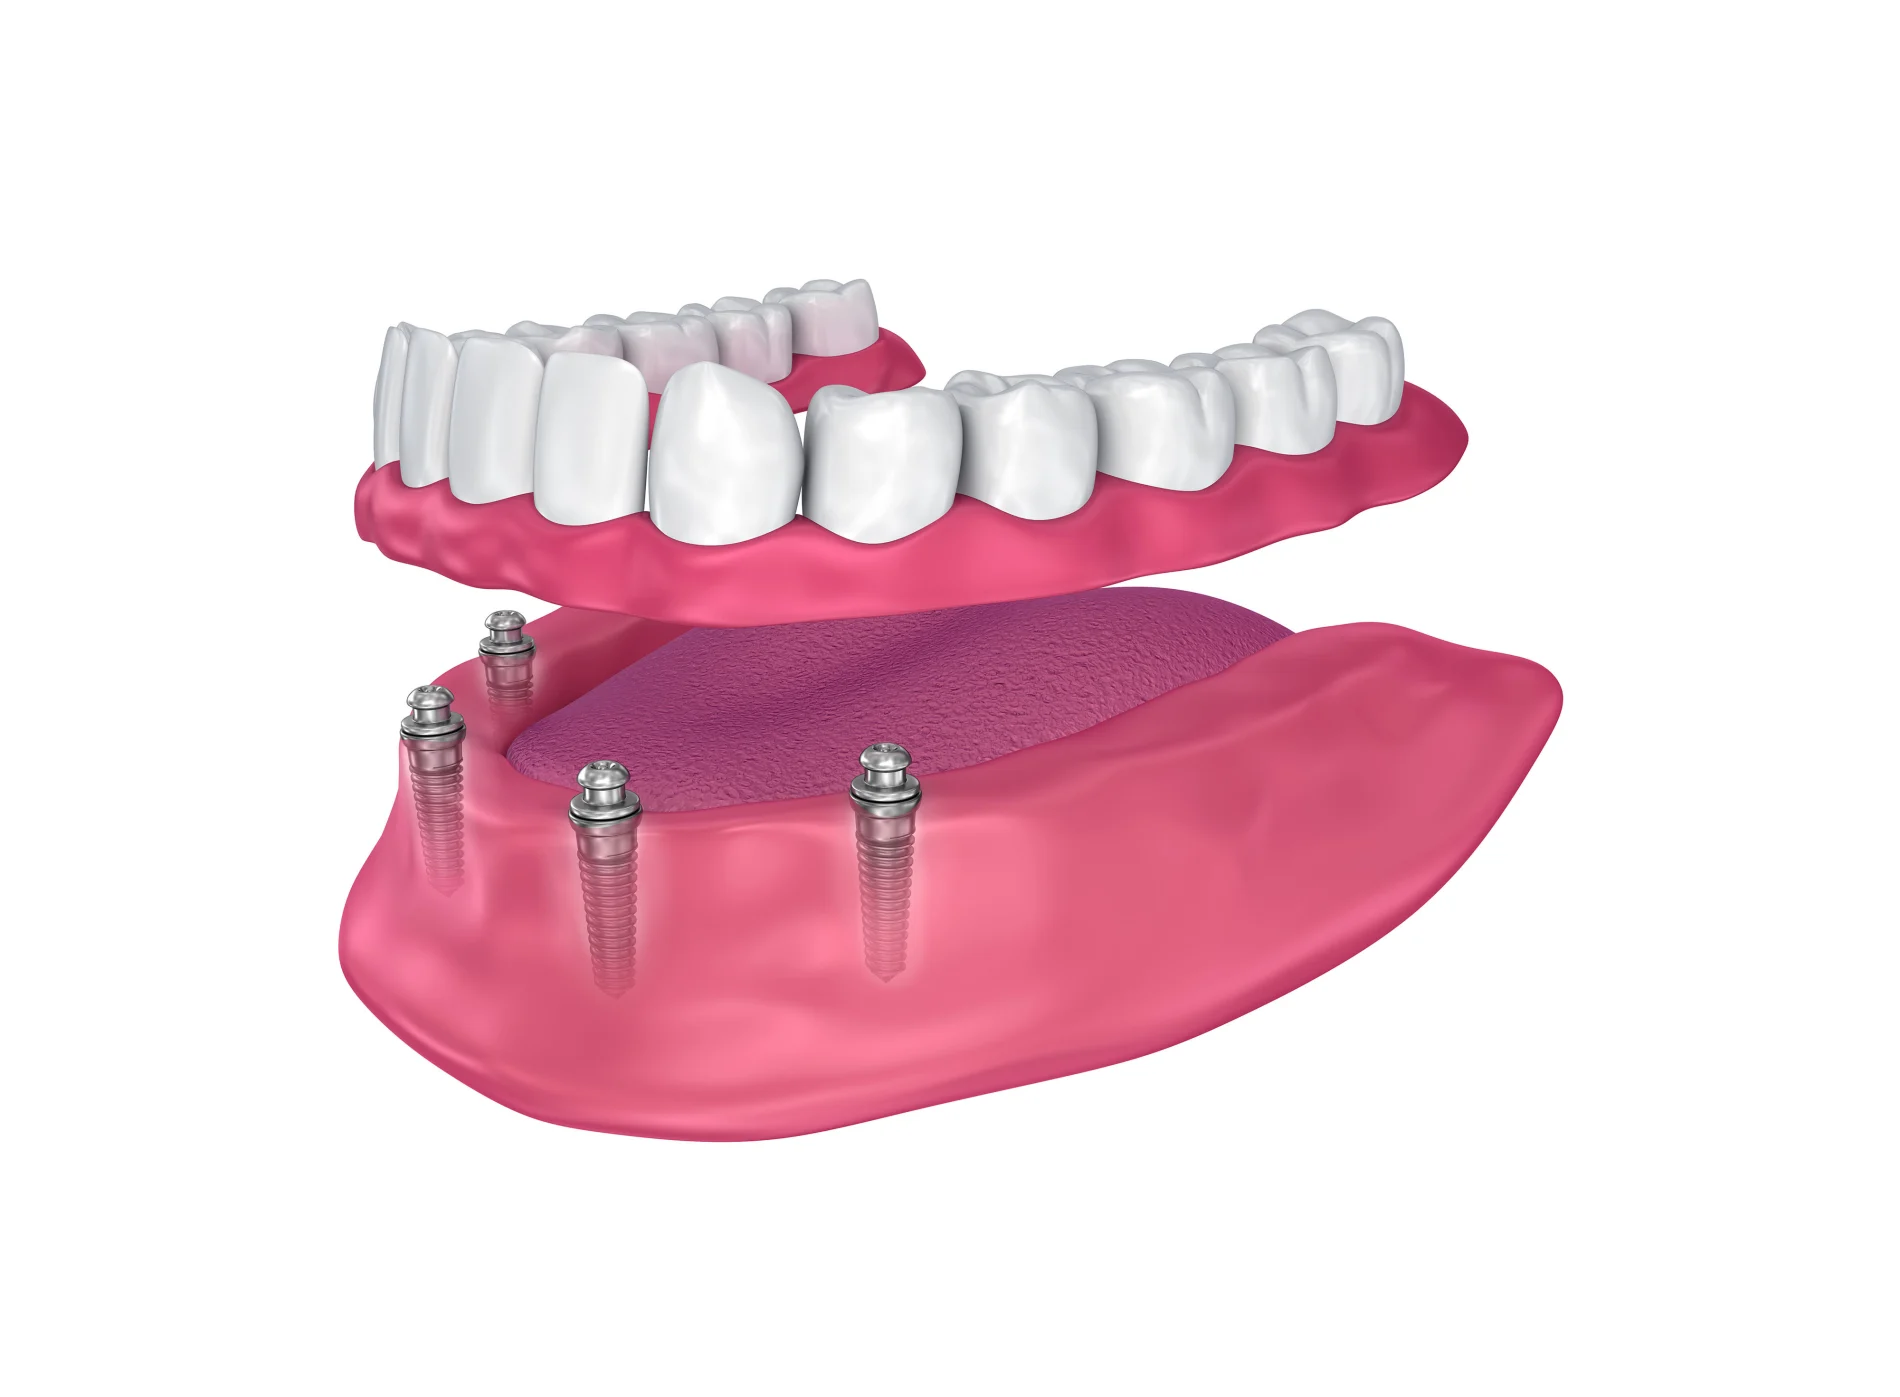 Imagen 3D de implantes dentales all-on-4.